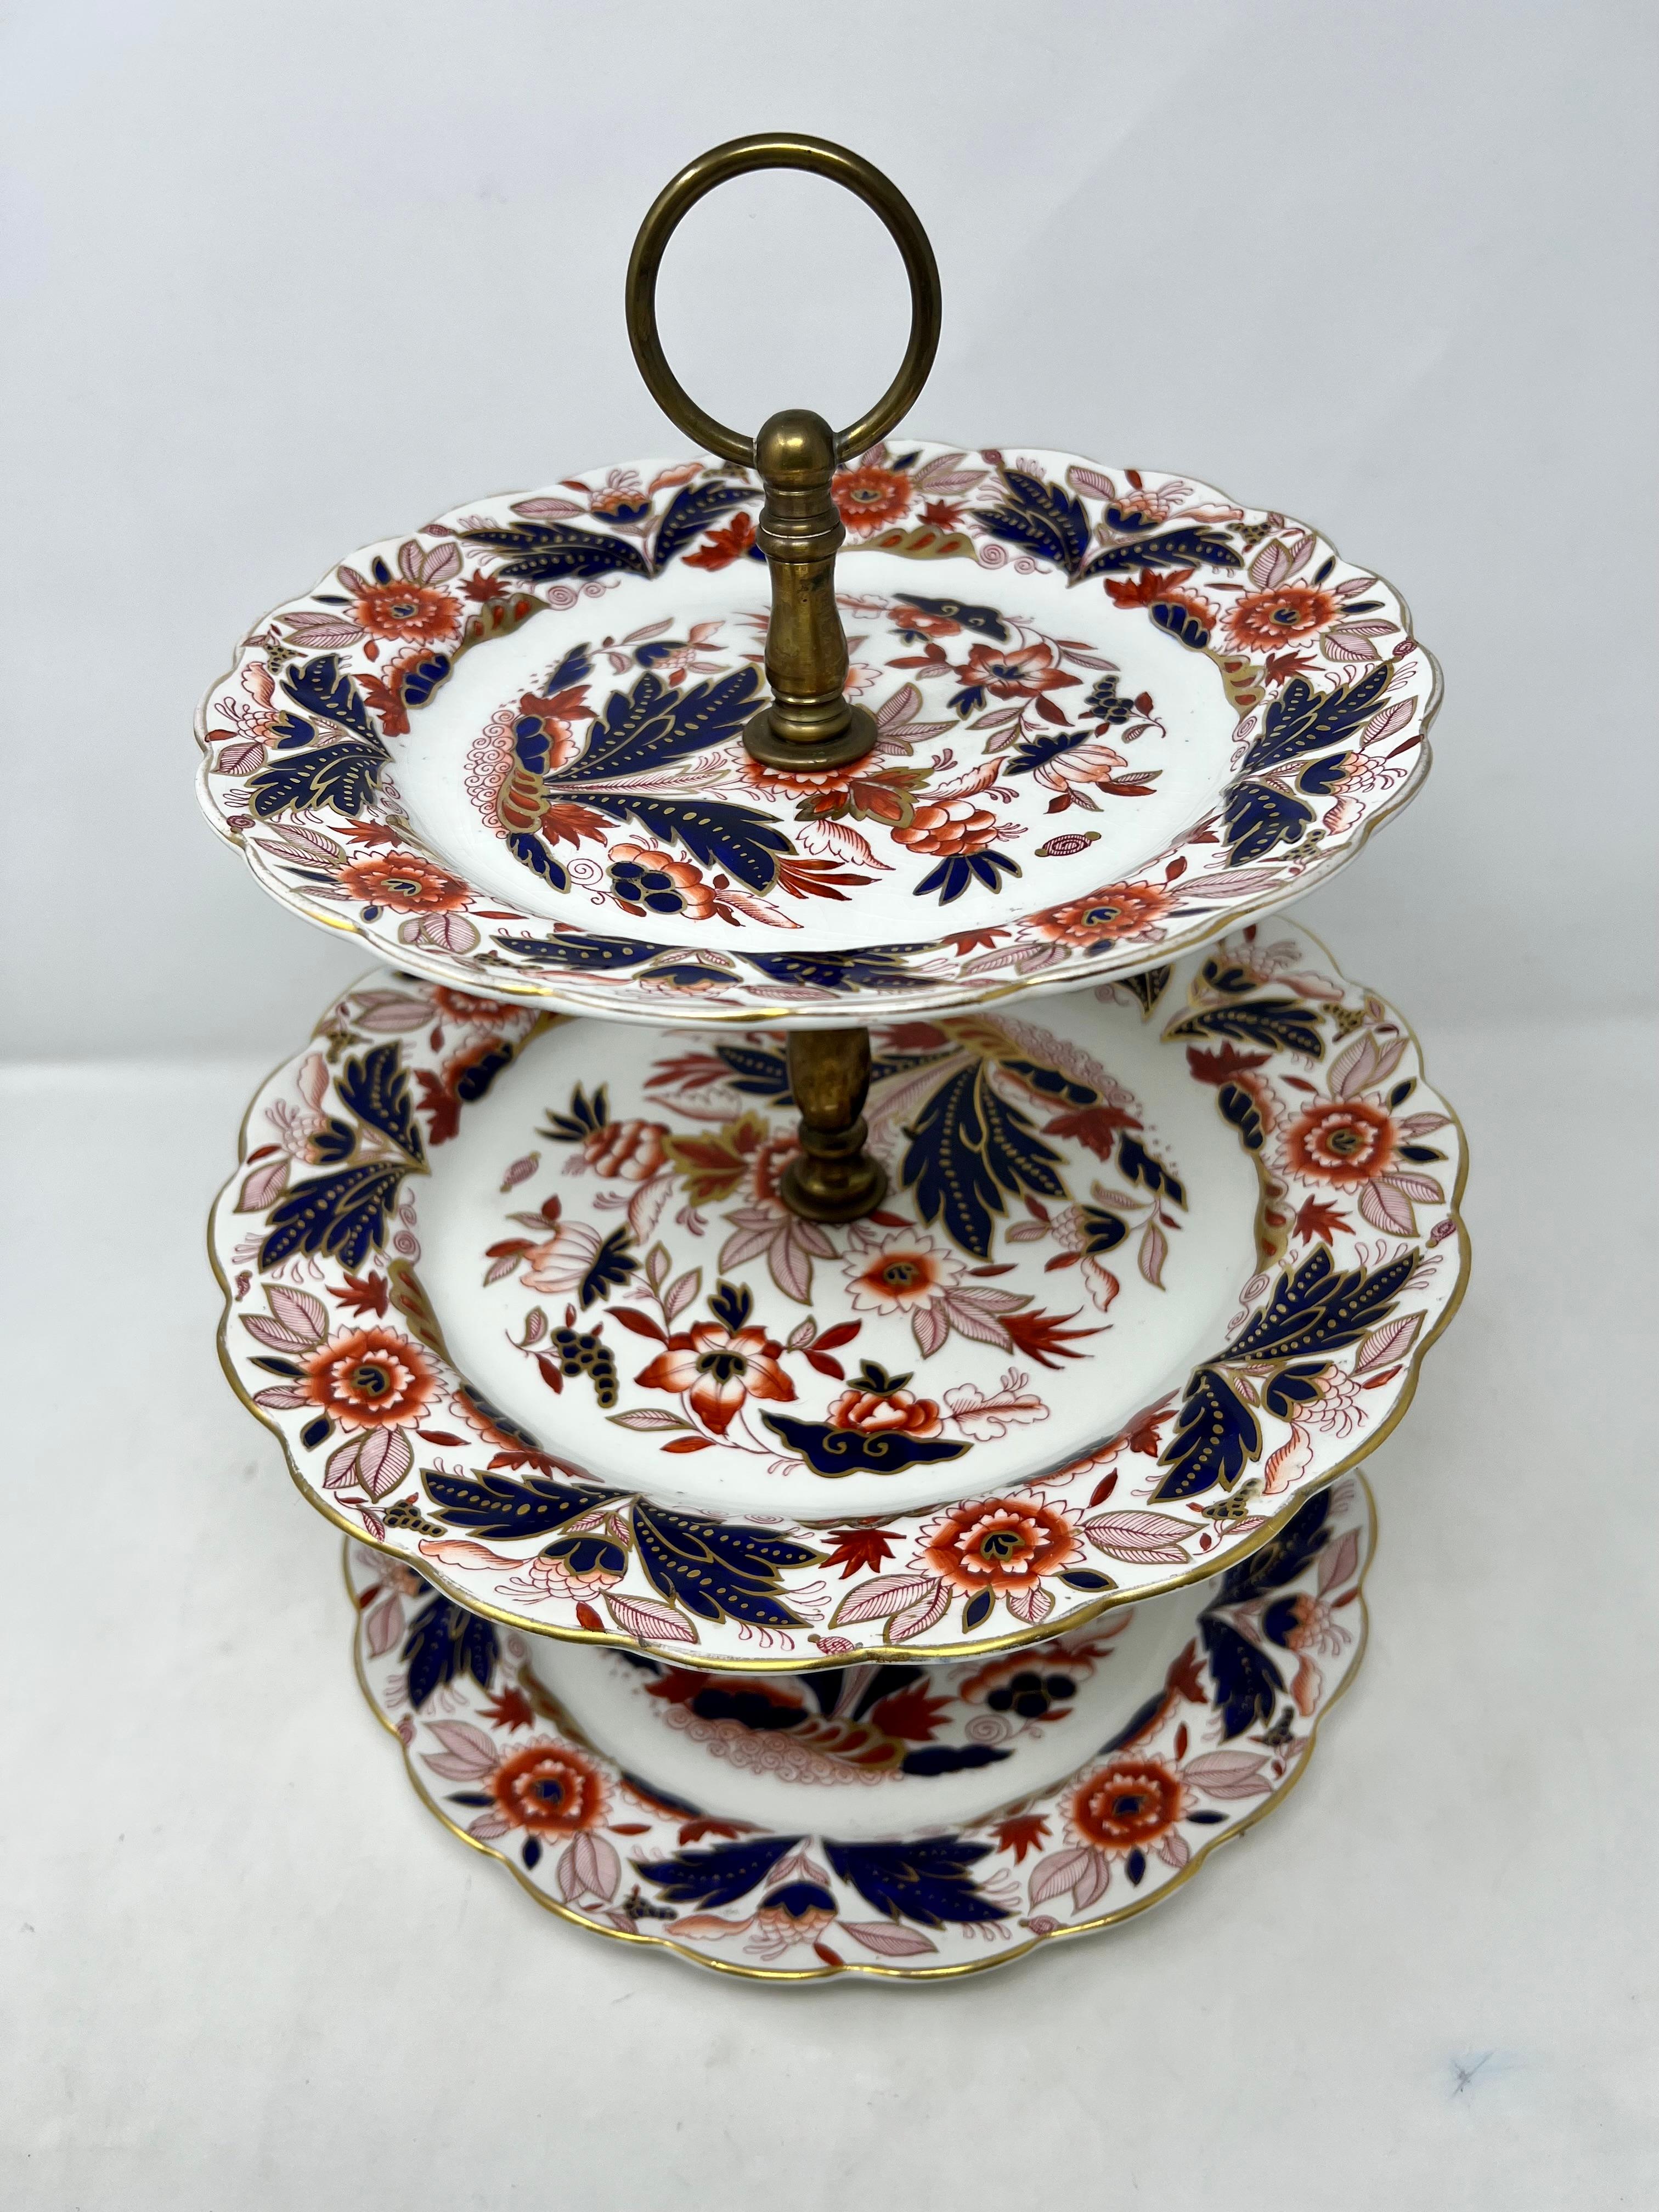 Vintage Dovedale 3-tier Imari pattern porcelain cake stand.